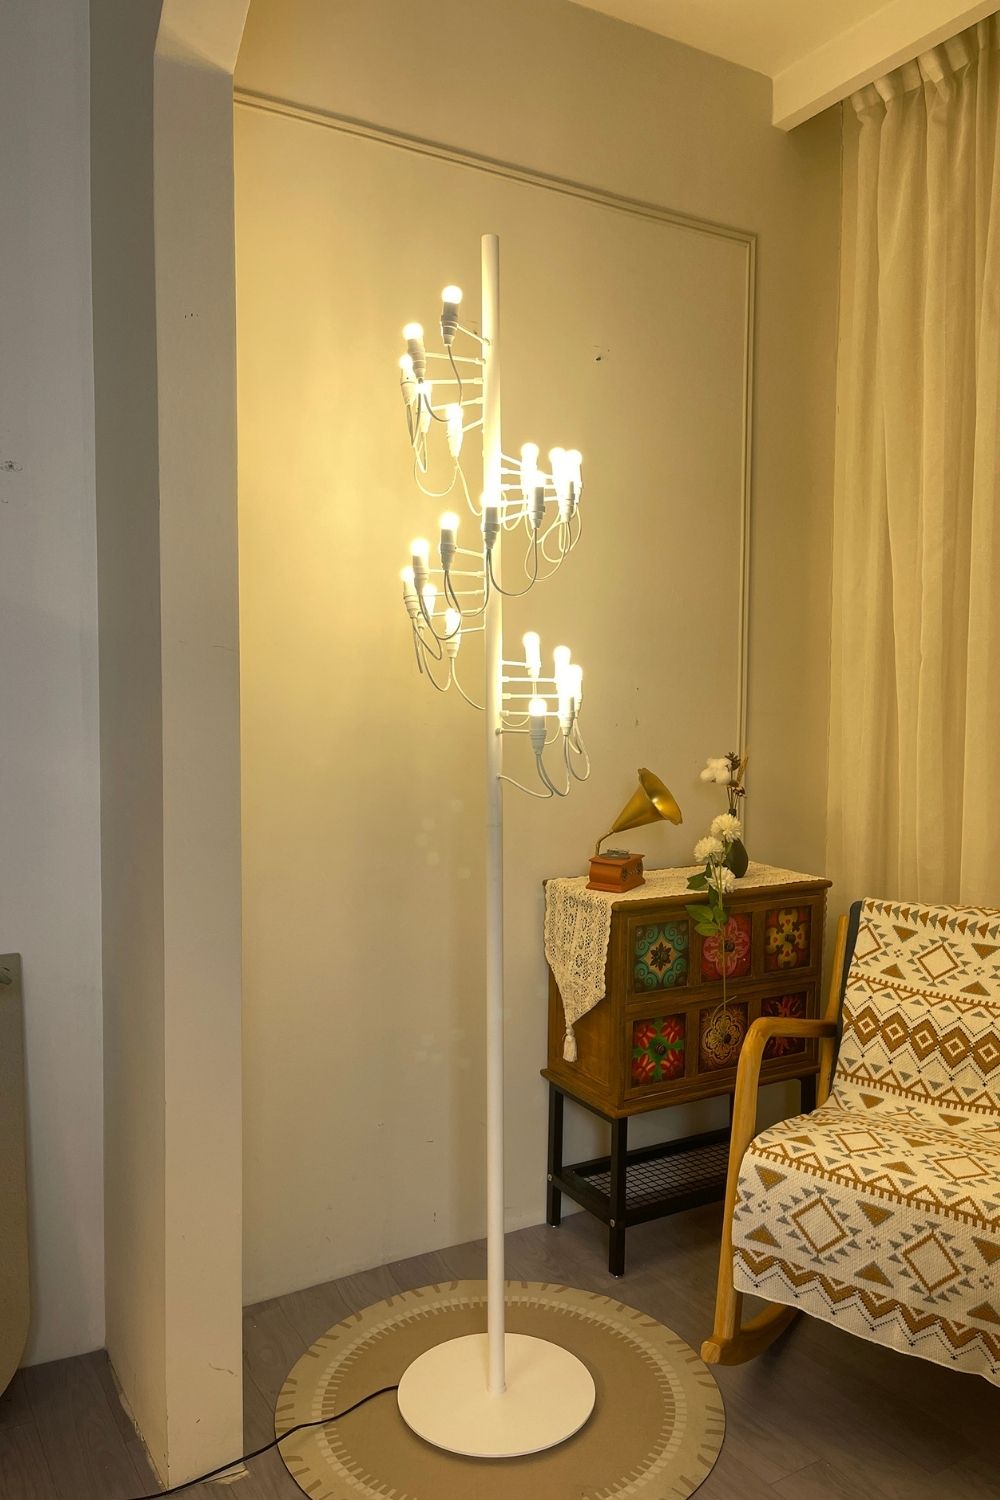 Traditional Mid-century 2097 Floor Lamp